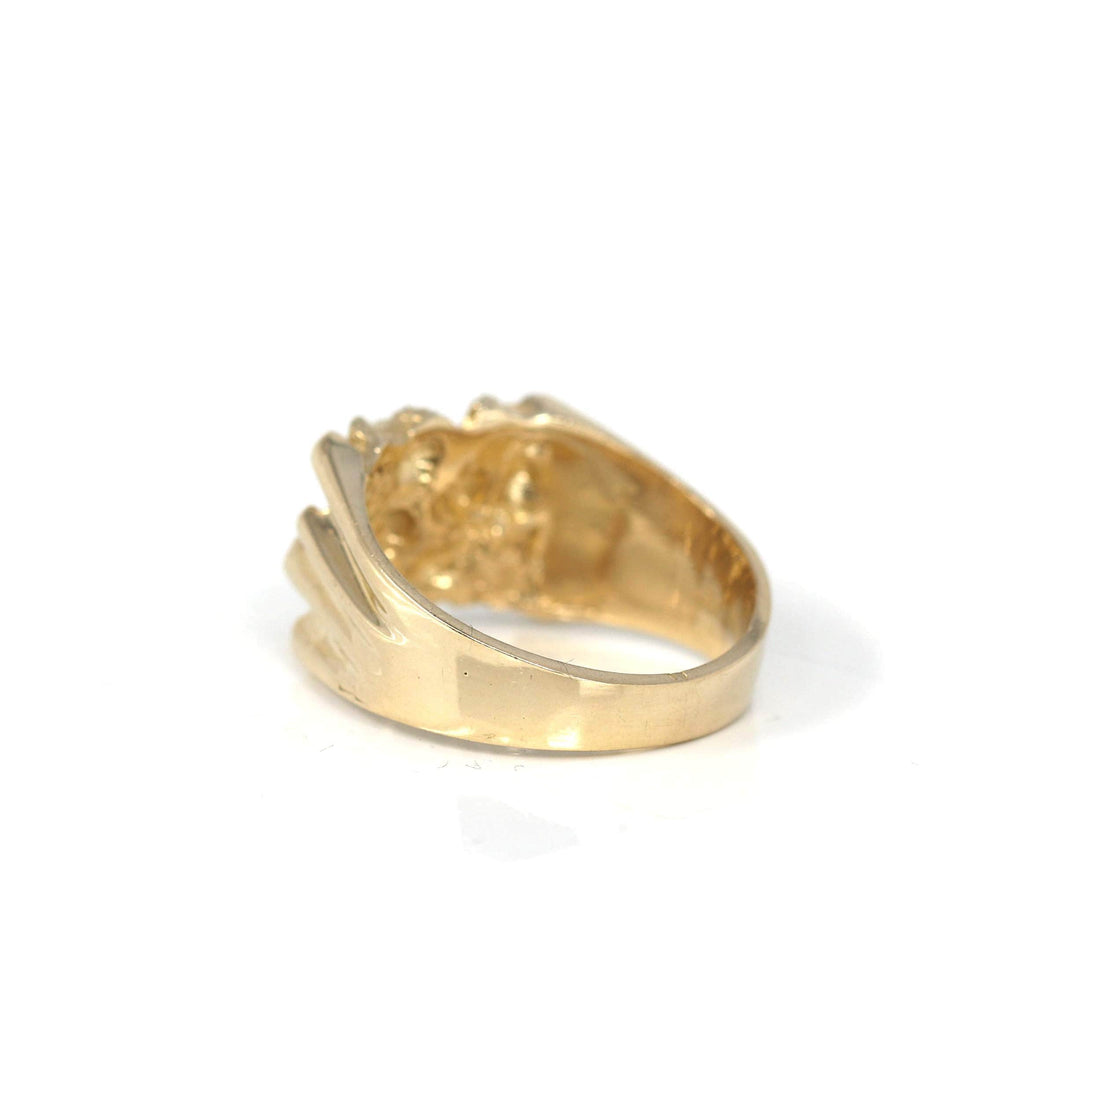 Baikalla Jewelry Gold Diamond Men's Ring 14k Solid Yellow Gold Nugget Men's Band Ring